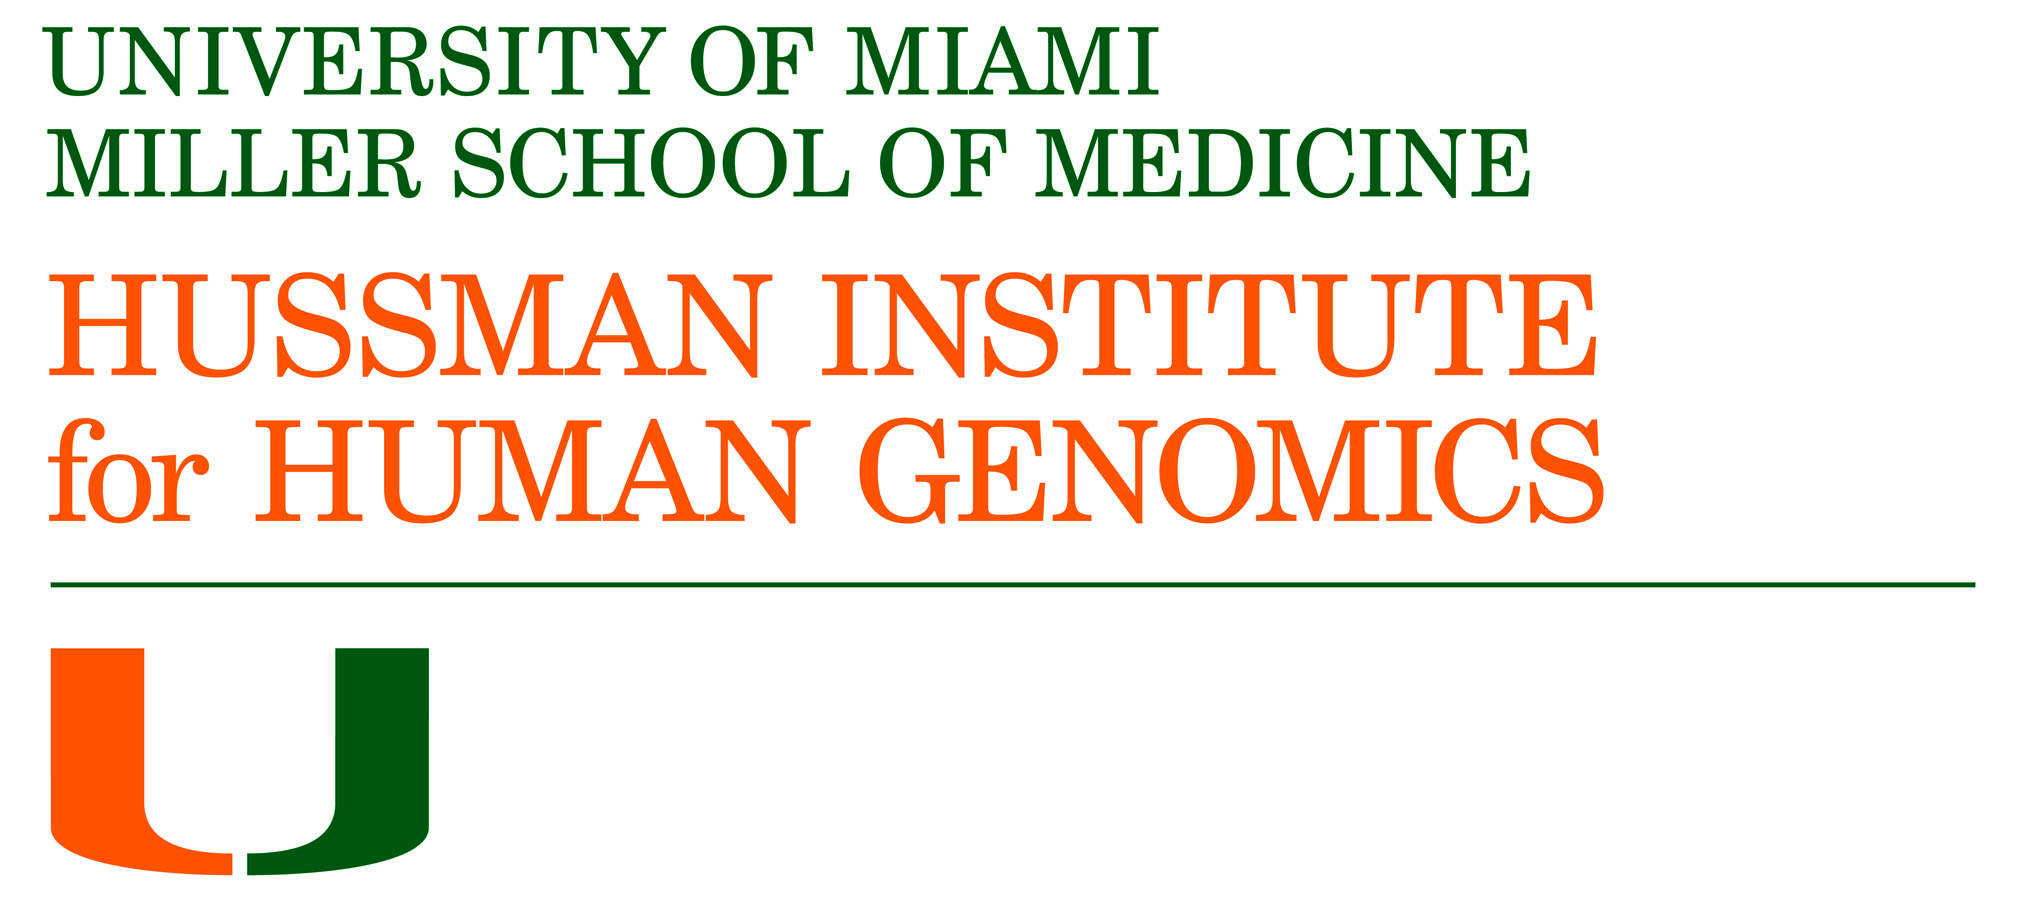 Hussman Institute for Human Genomics